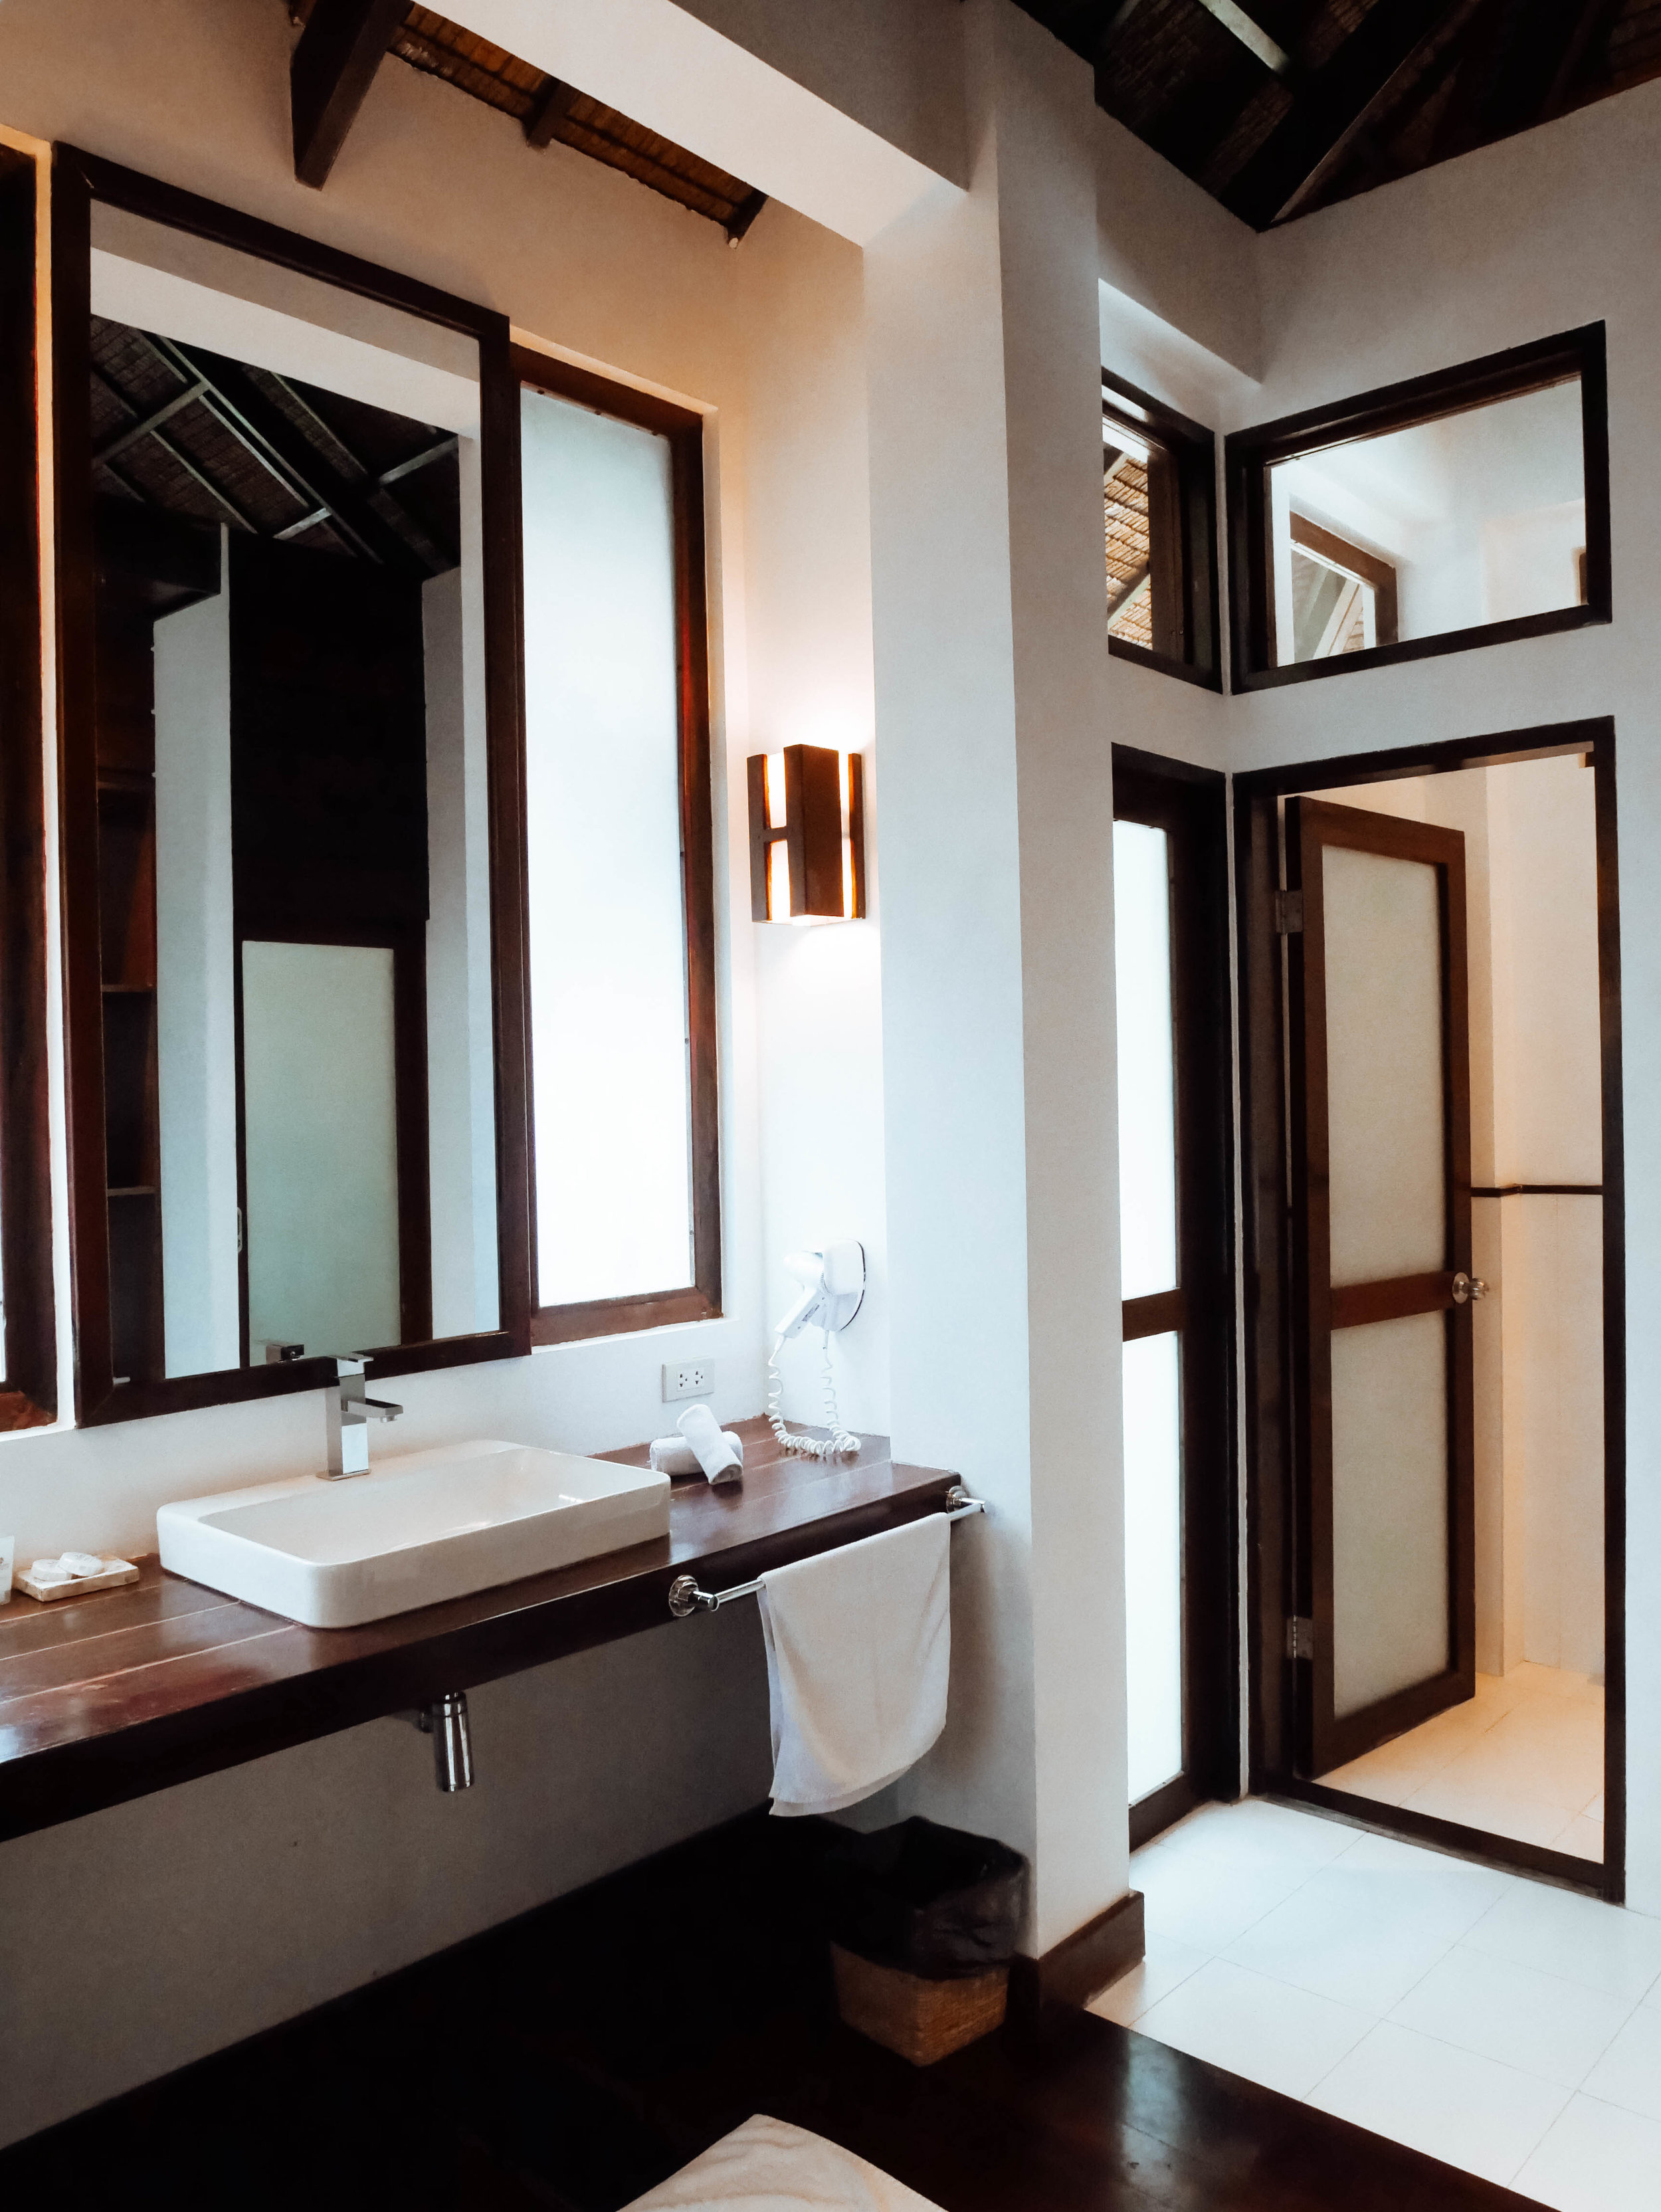 The Bathroom - Isla Cabana Beach Resort - General Luna - Siargao Island - Philippines